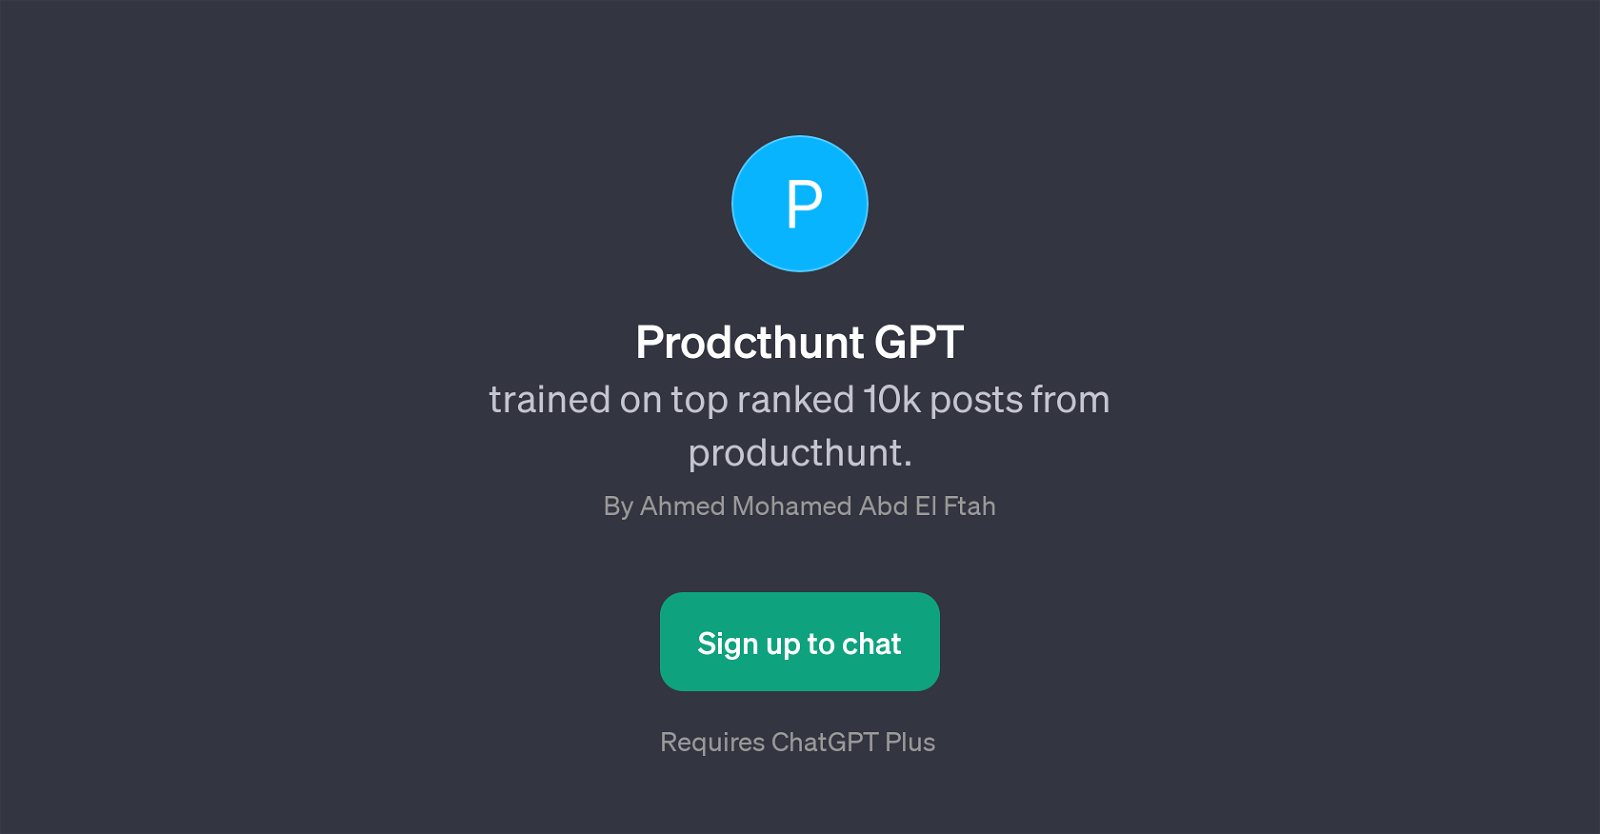 Prodcthunt GPT website